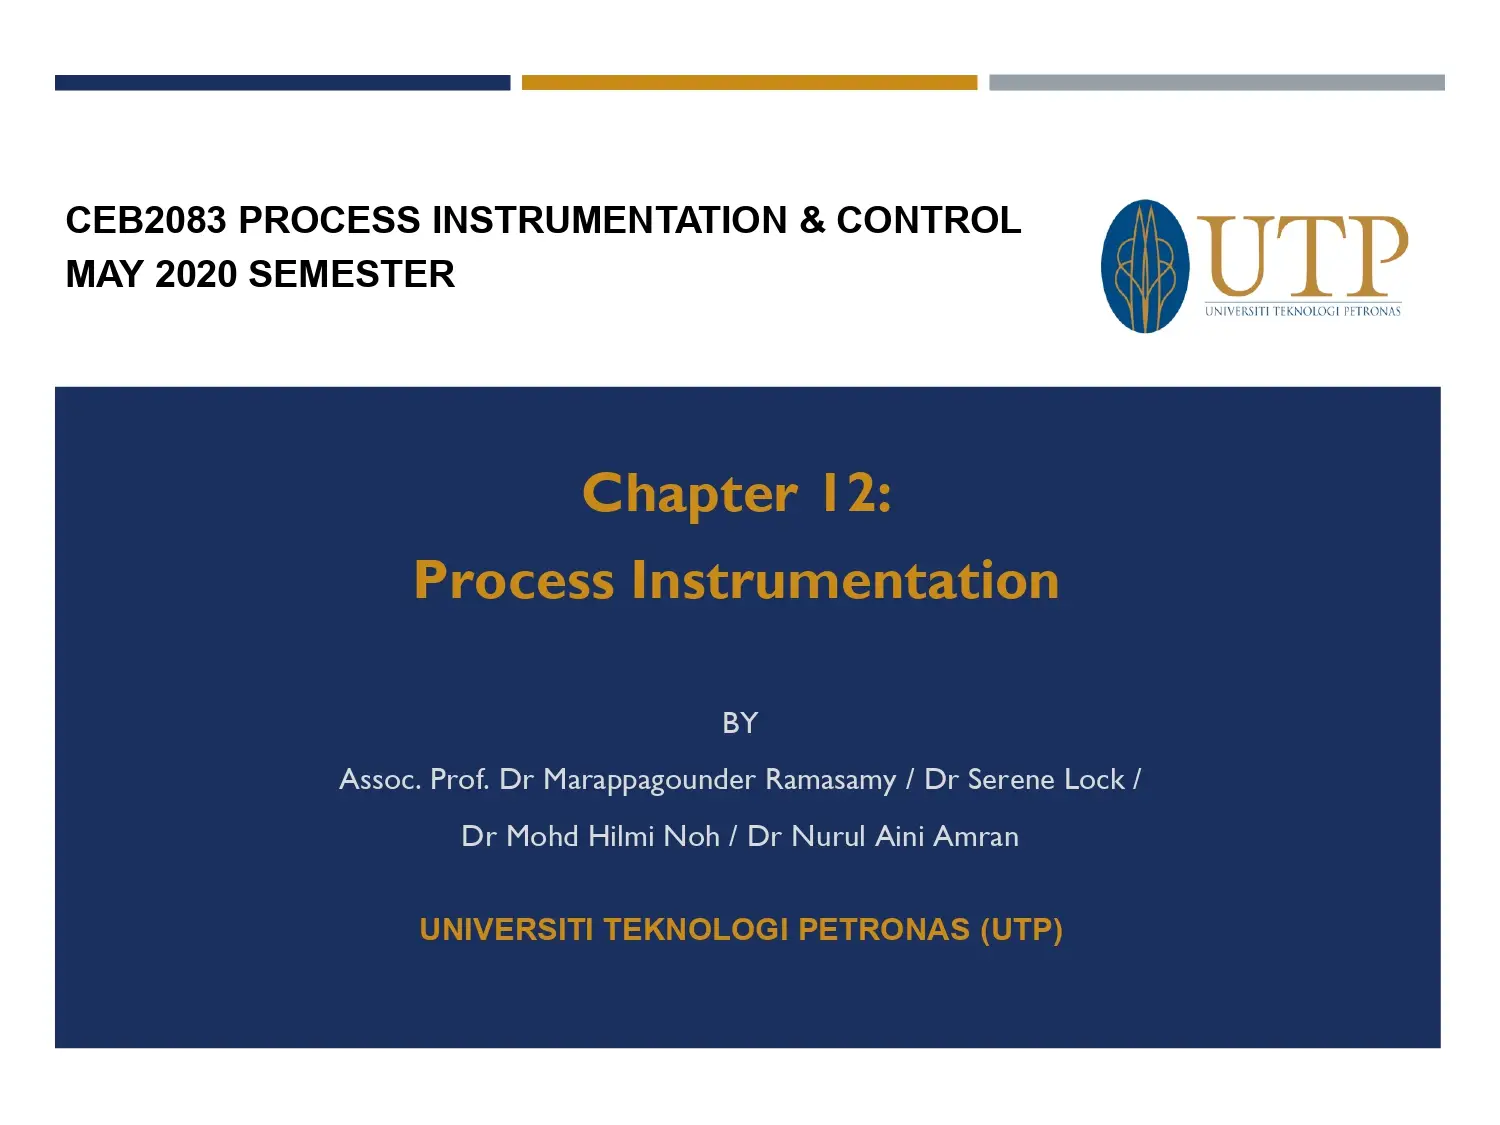 Chapter 12: Process Instrumentation